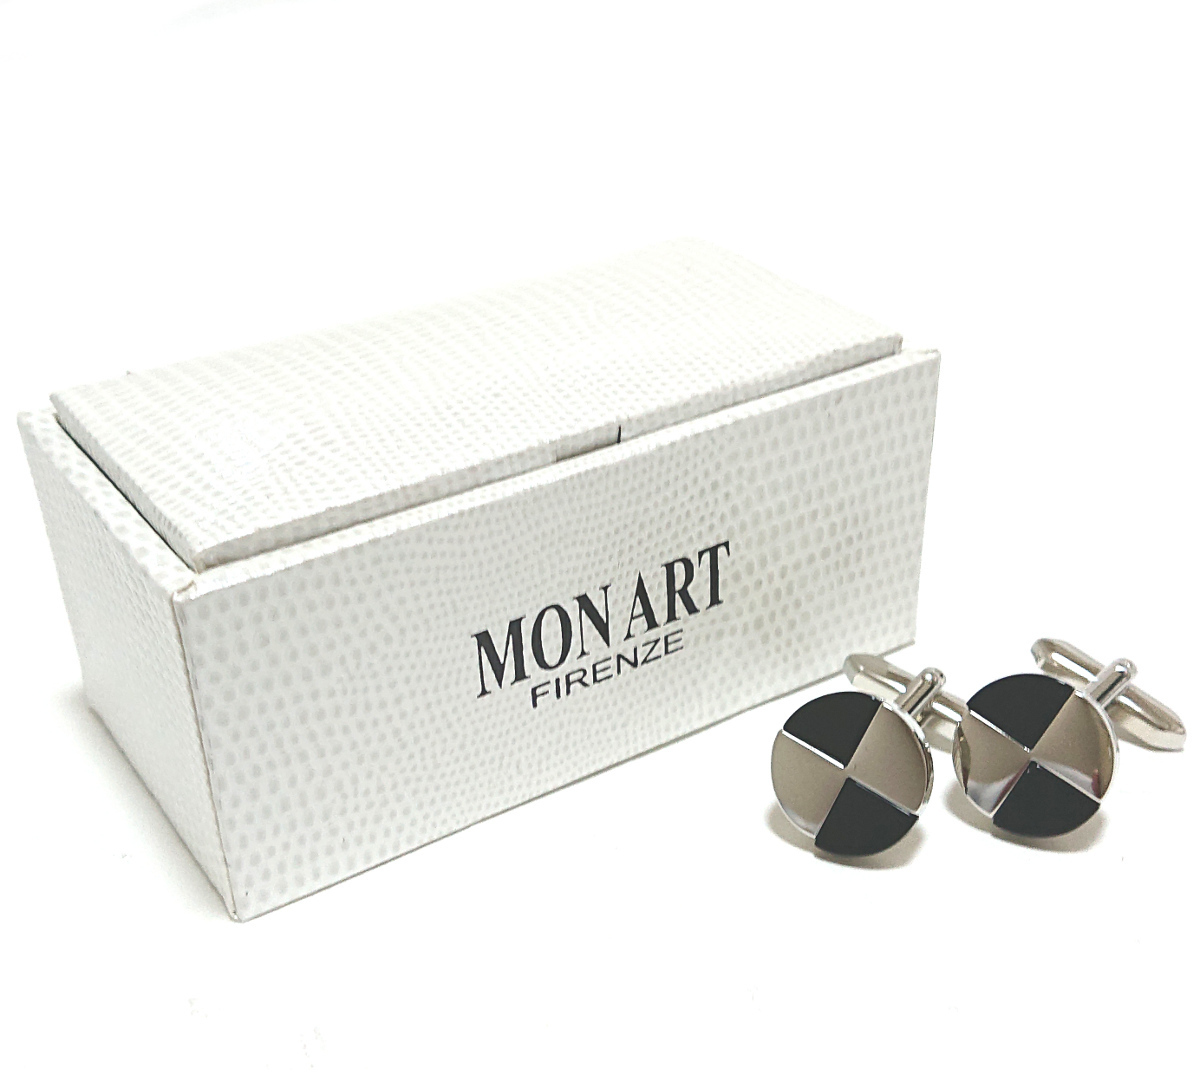 [mac52] new goods MON ARTmon art cuffs cuff links silver × black black Stone 